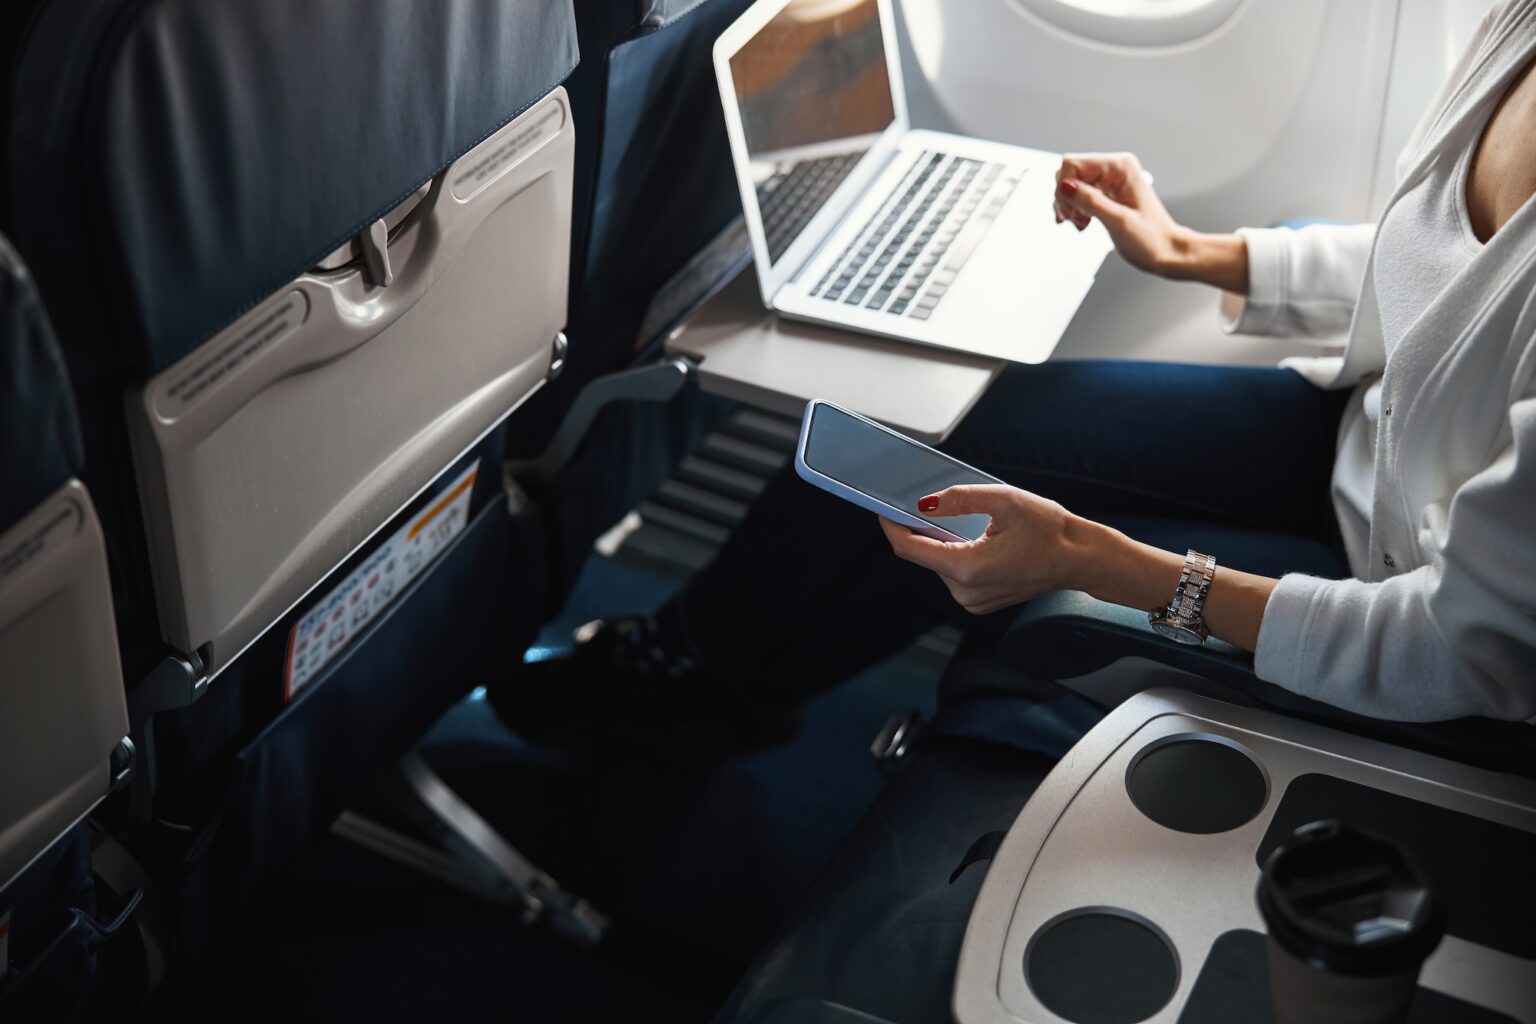 Unrecognized female passenger using the Internet in the plane